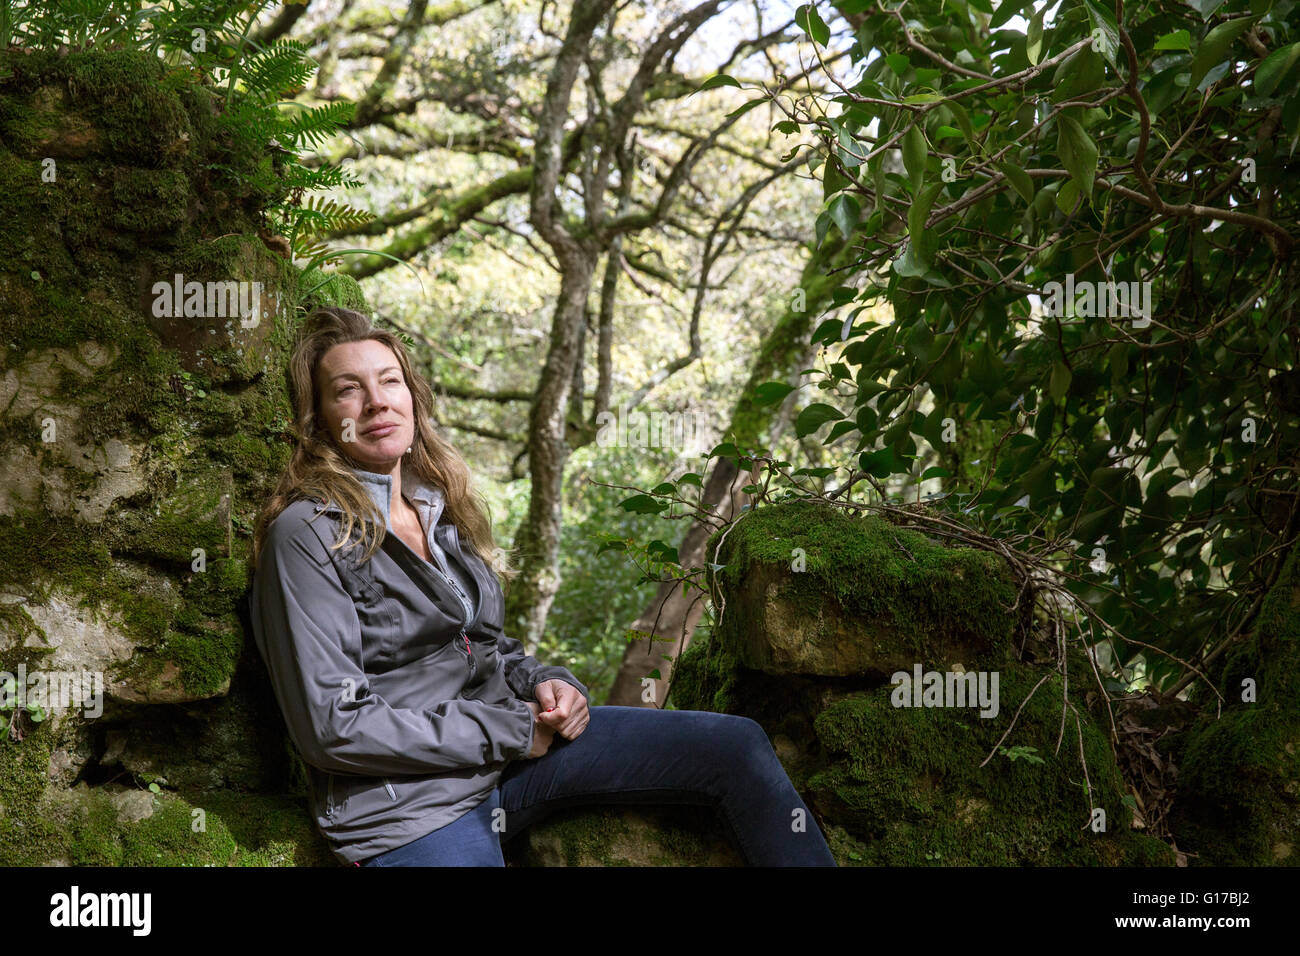 Female hiker sitting on moss covered woodland rocks, Spain Stock Photo